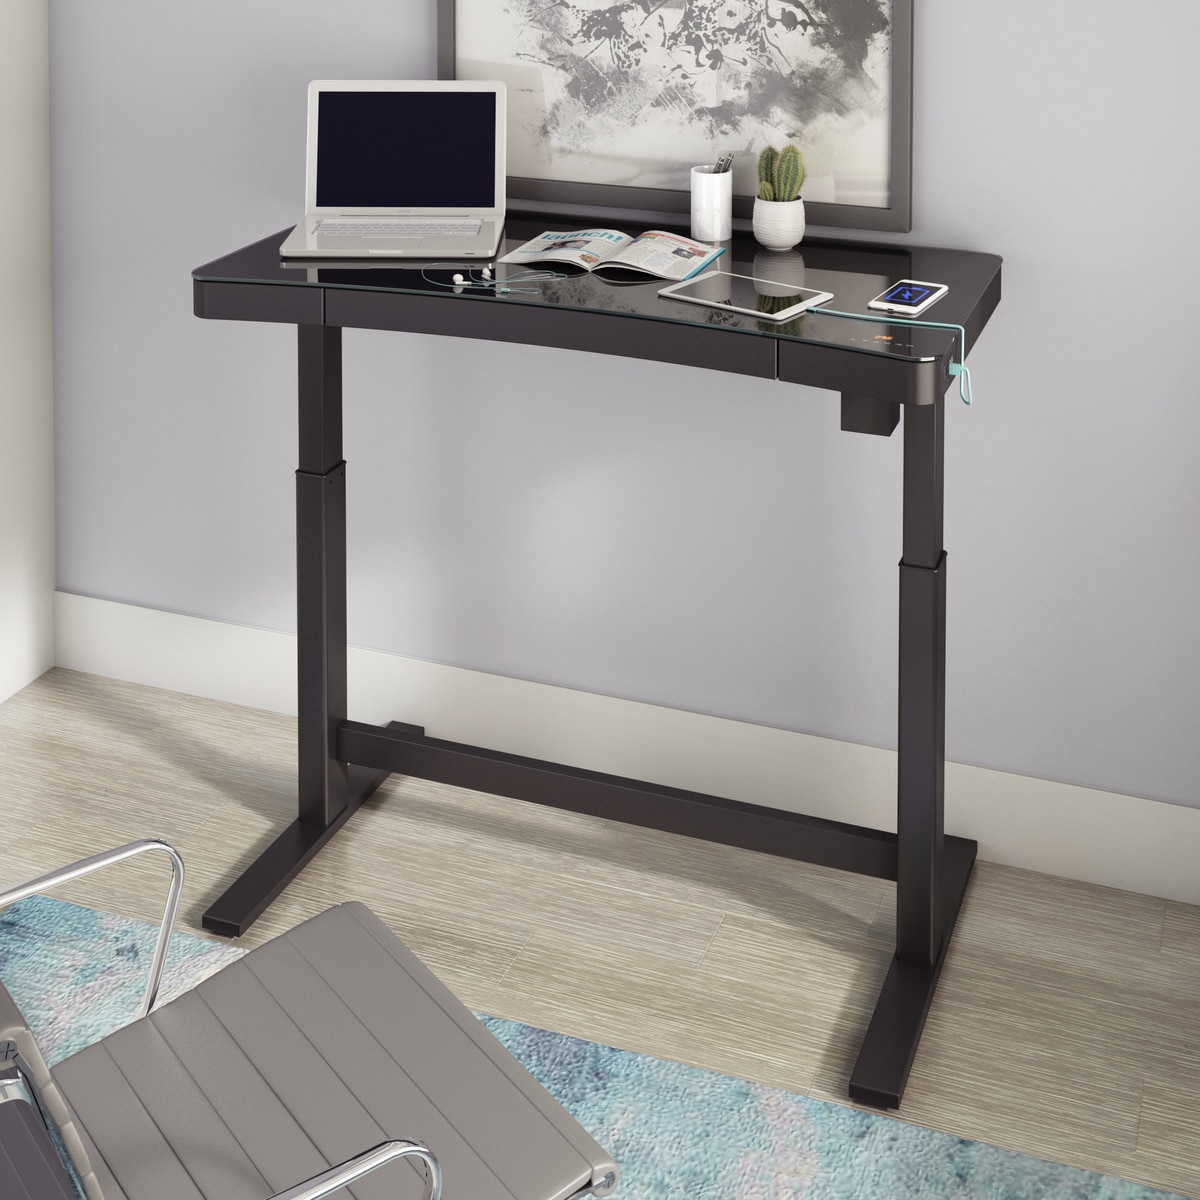 Tresanti Black Adjustable Height Desk with Wireless Charging